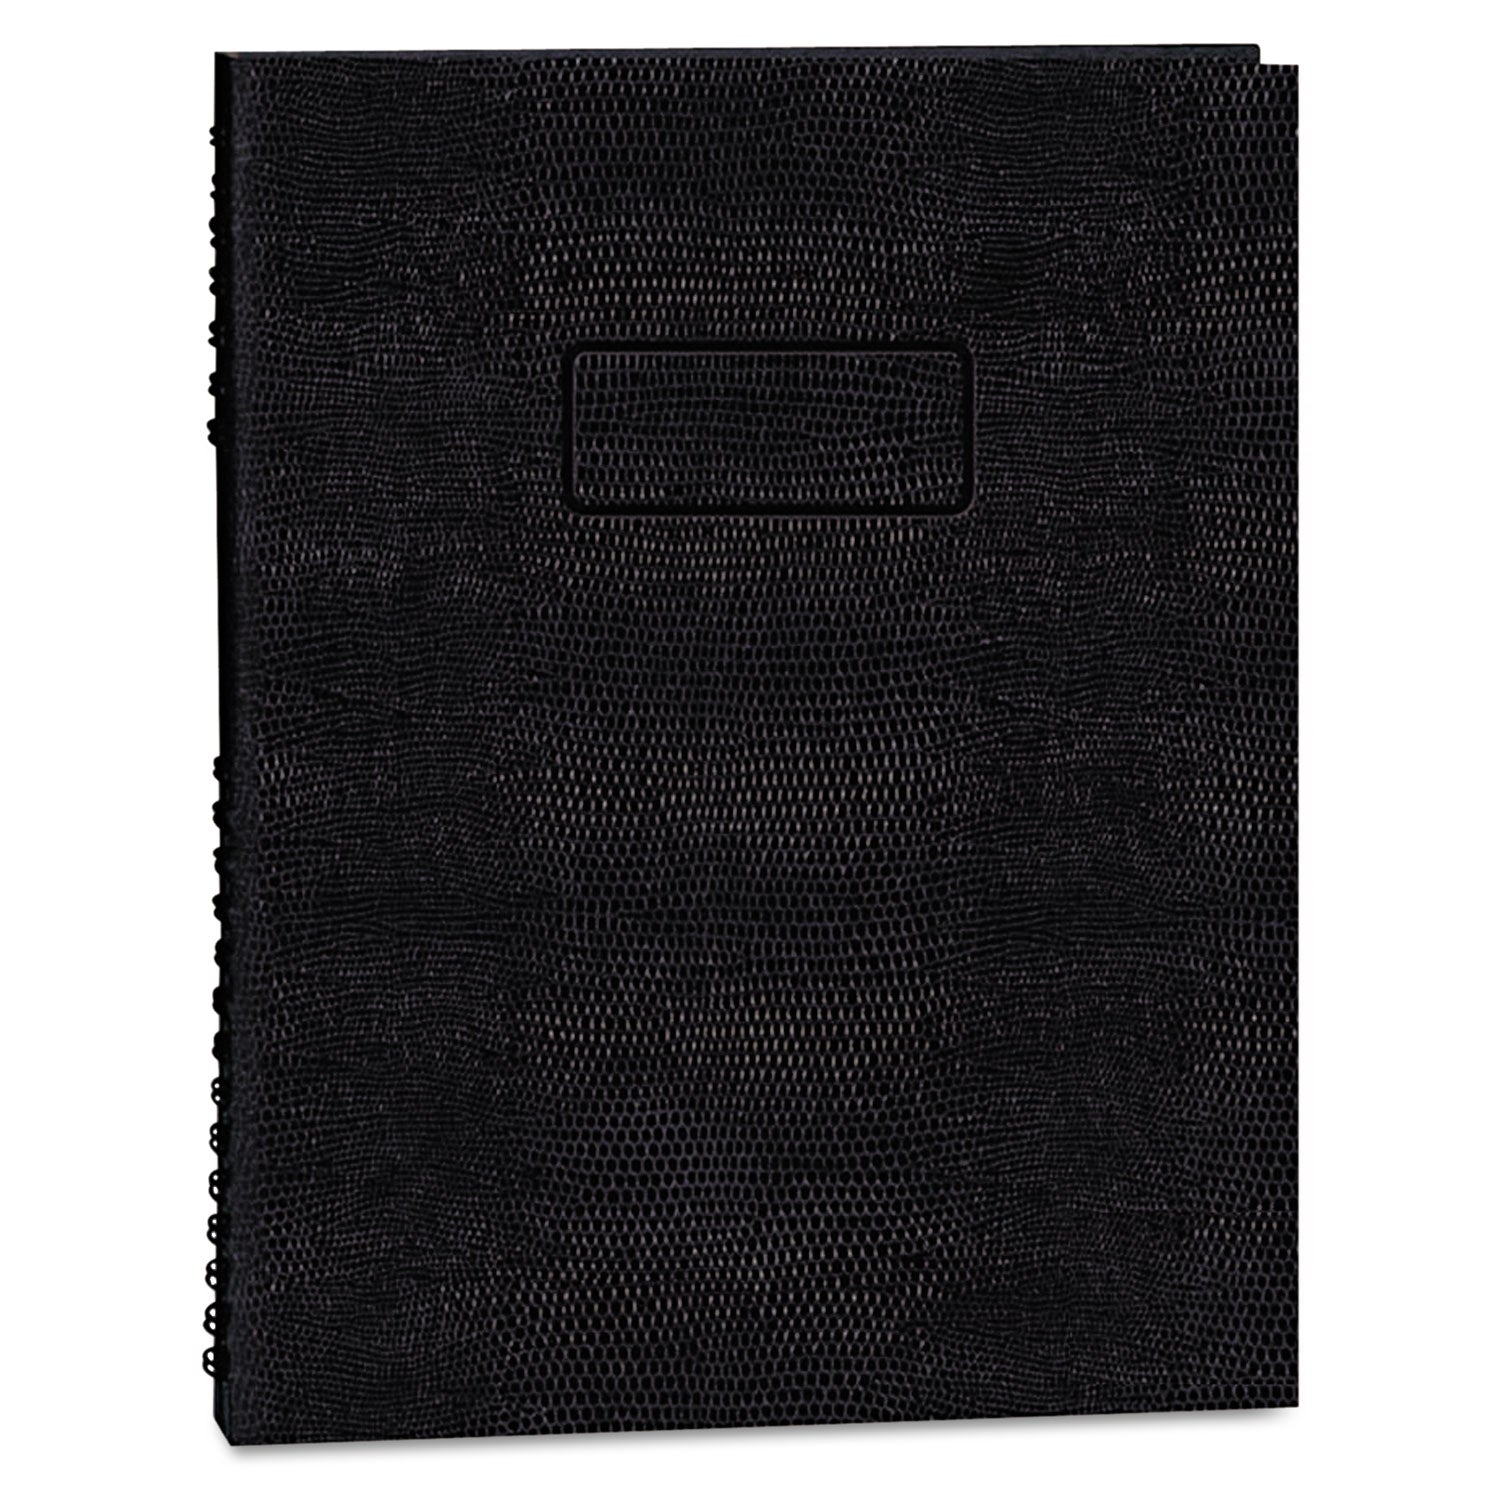 EcoLogix NotePro Executive Notebook, 1-Subject, Medium/College Rule, Black Cover, (100) 11 x 8.5 Sheets - 